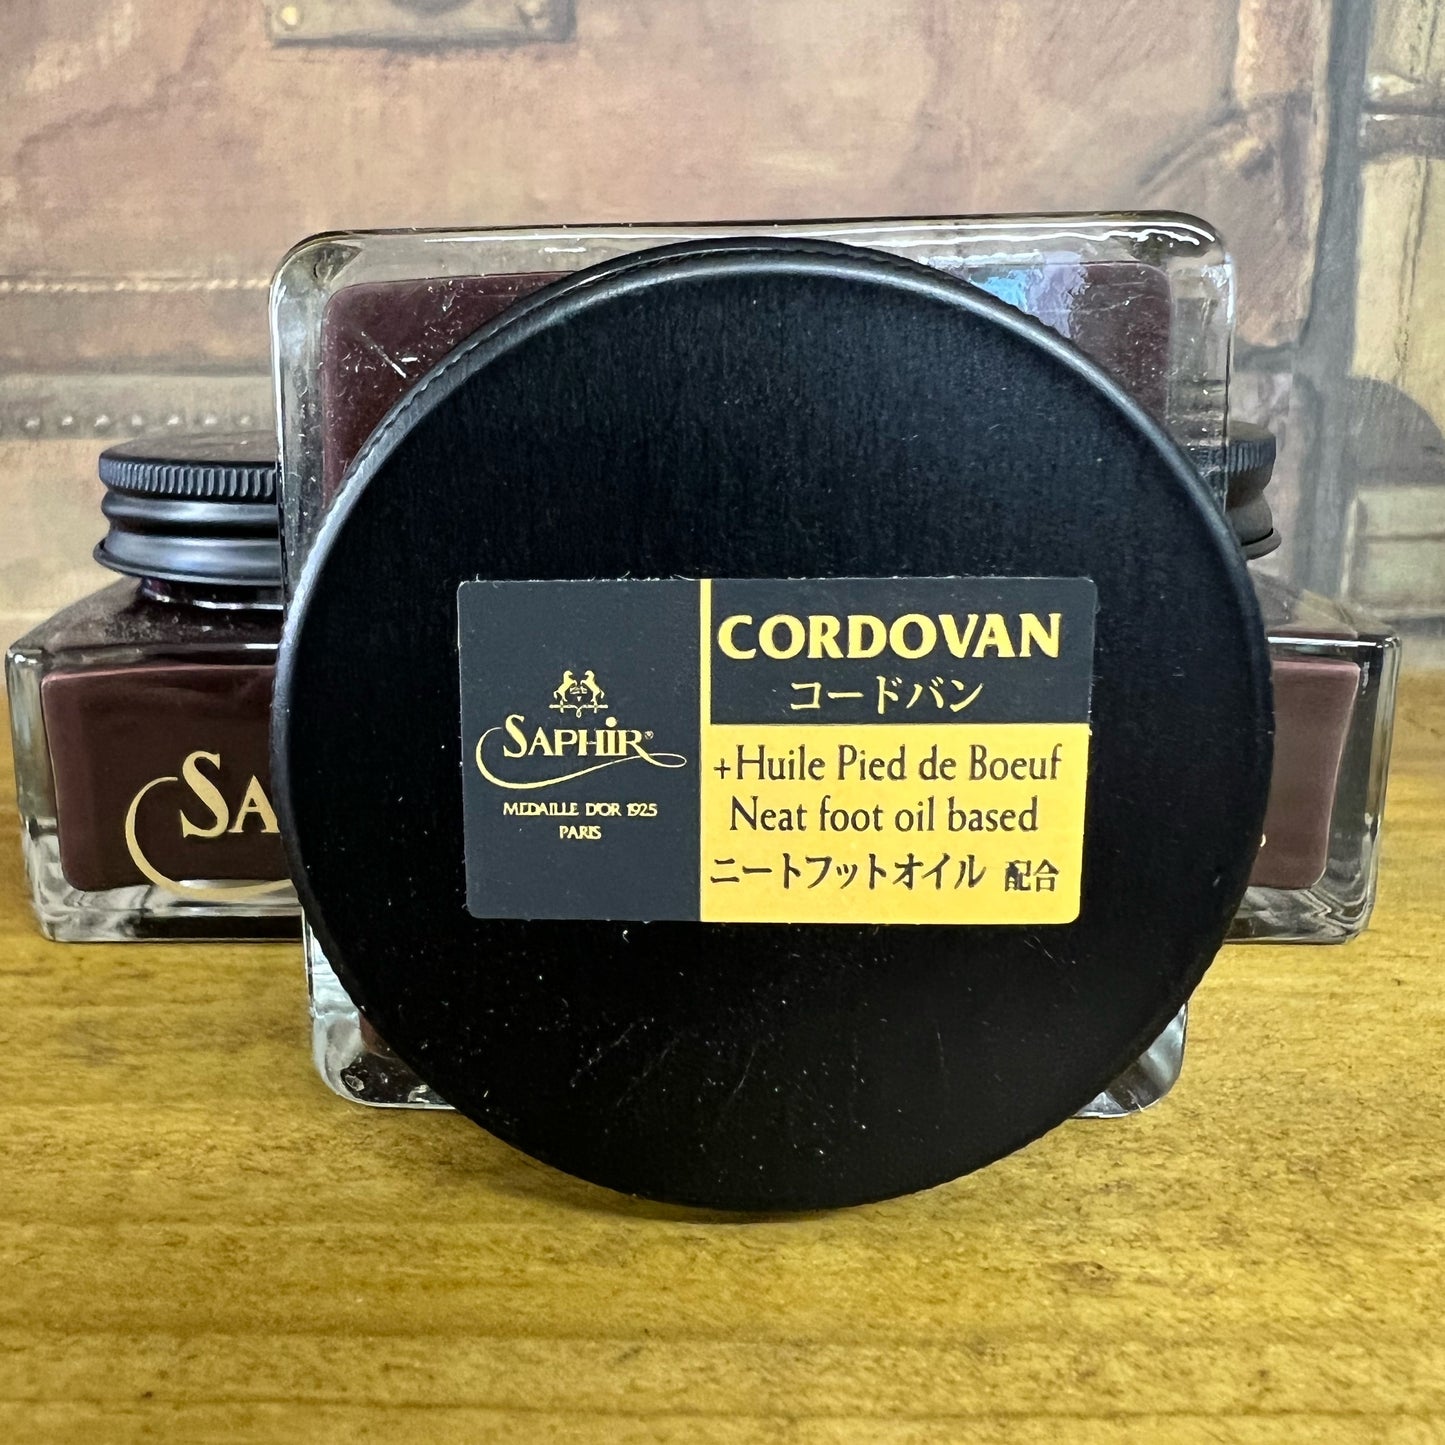 Saphir medaille D'or Cordovan Cream 75mm